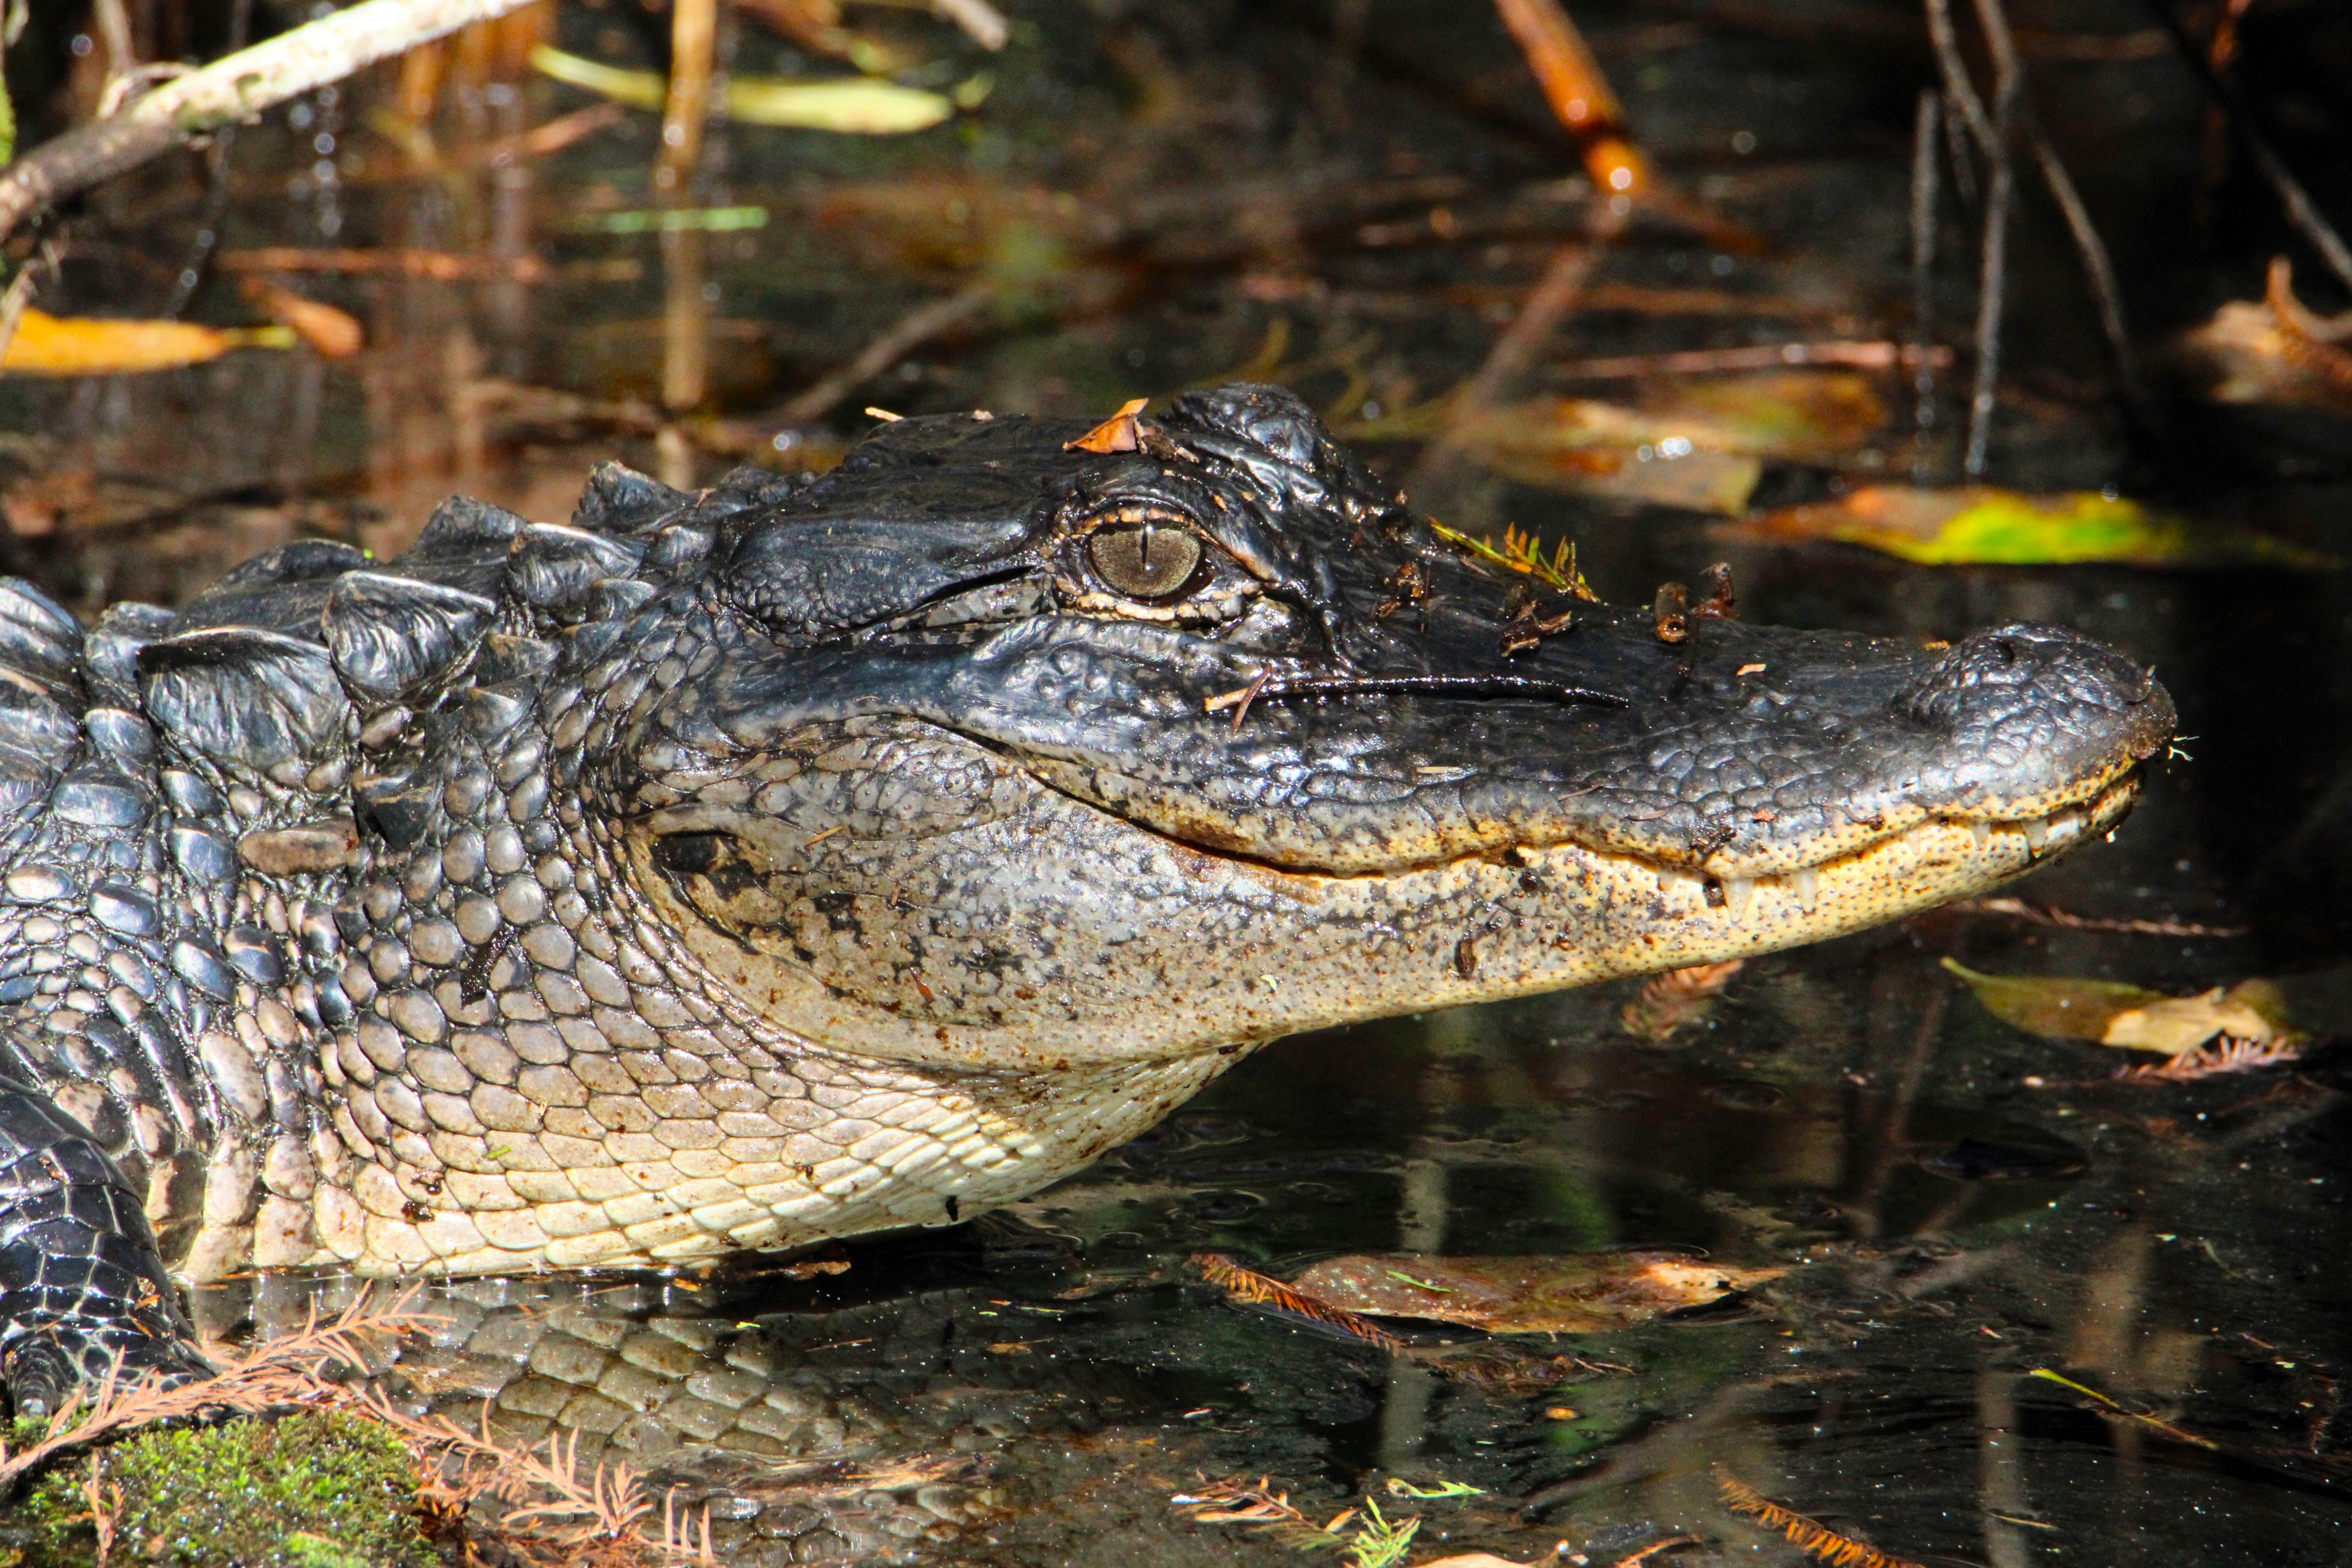 Close-up of an alligator.